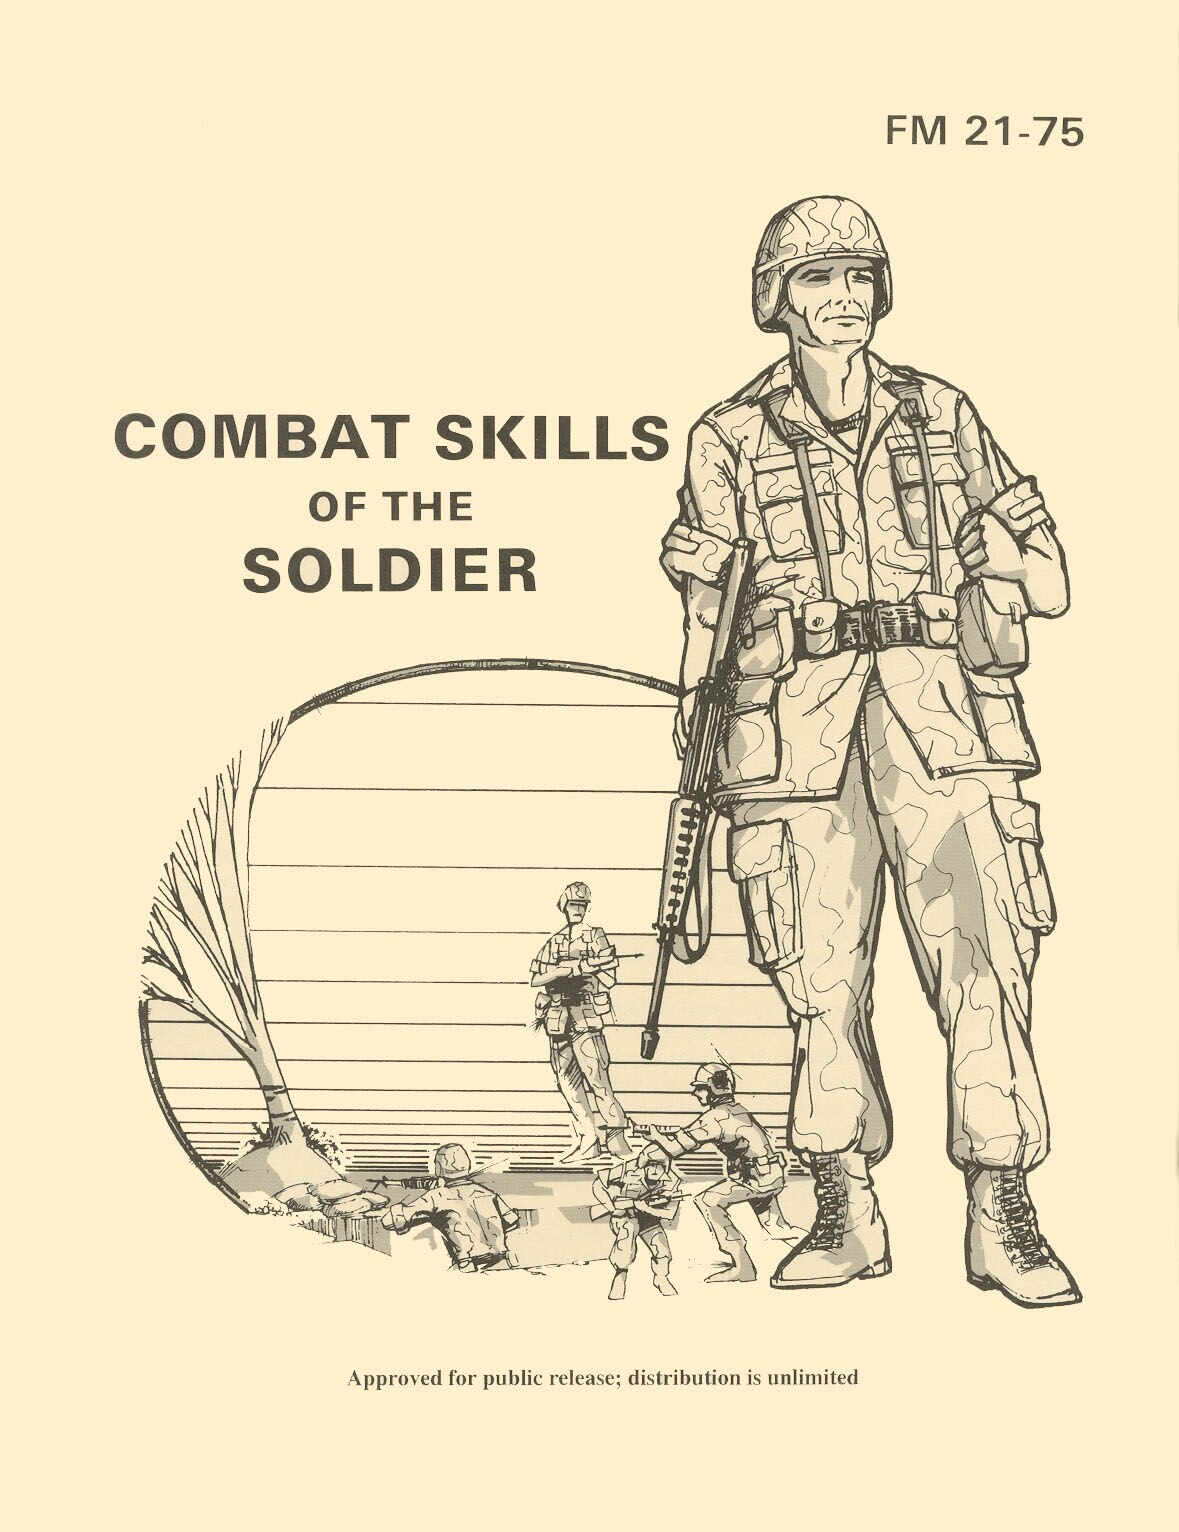 FM 21-75 Combat Skills of the Soldier